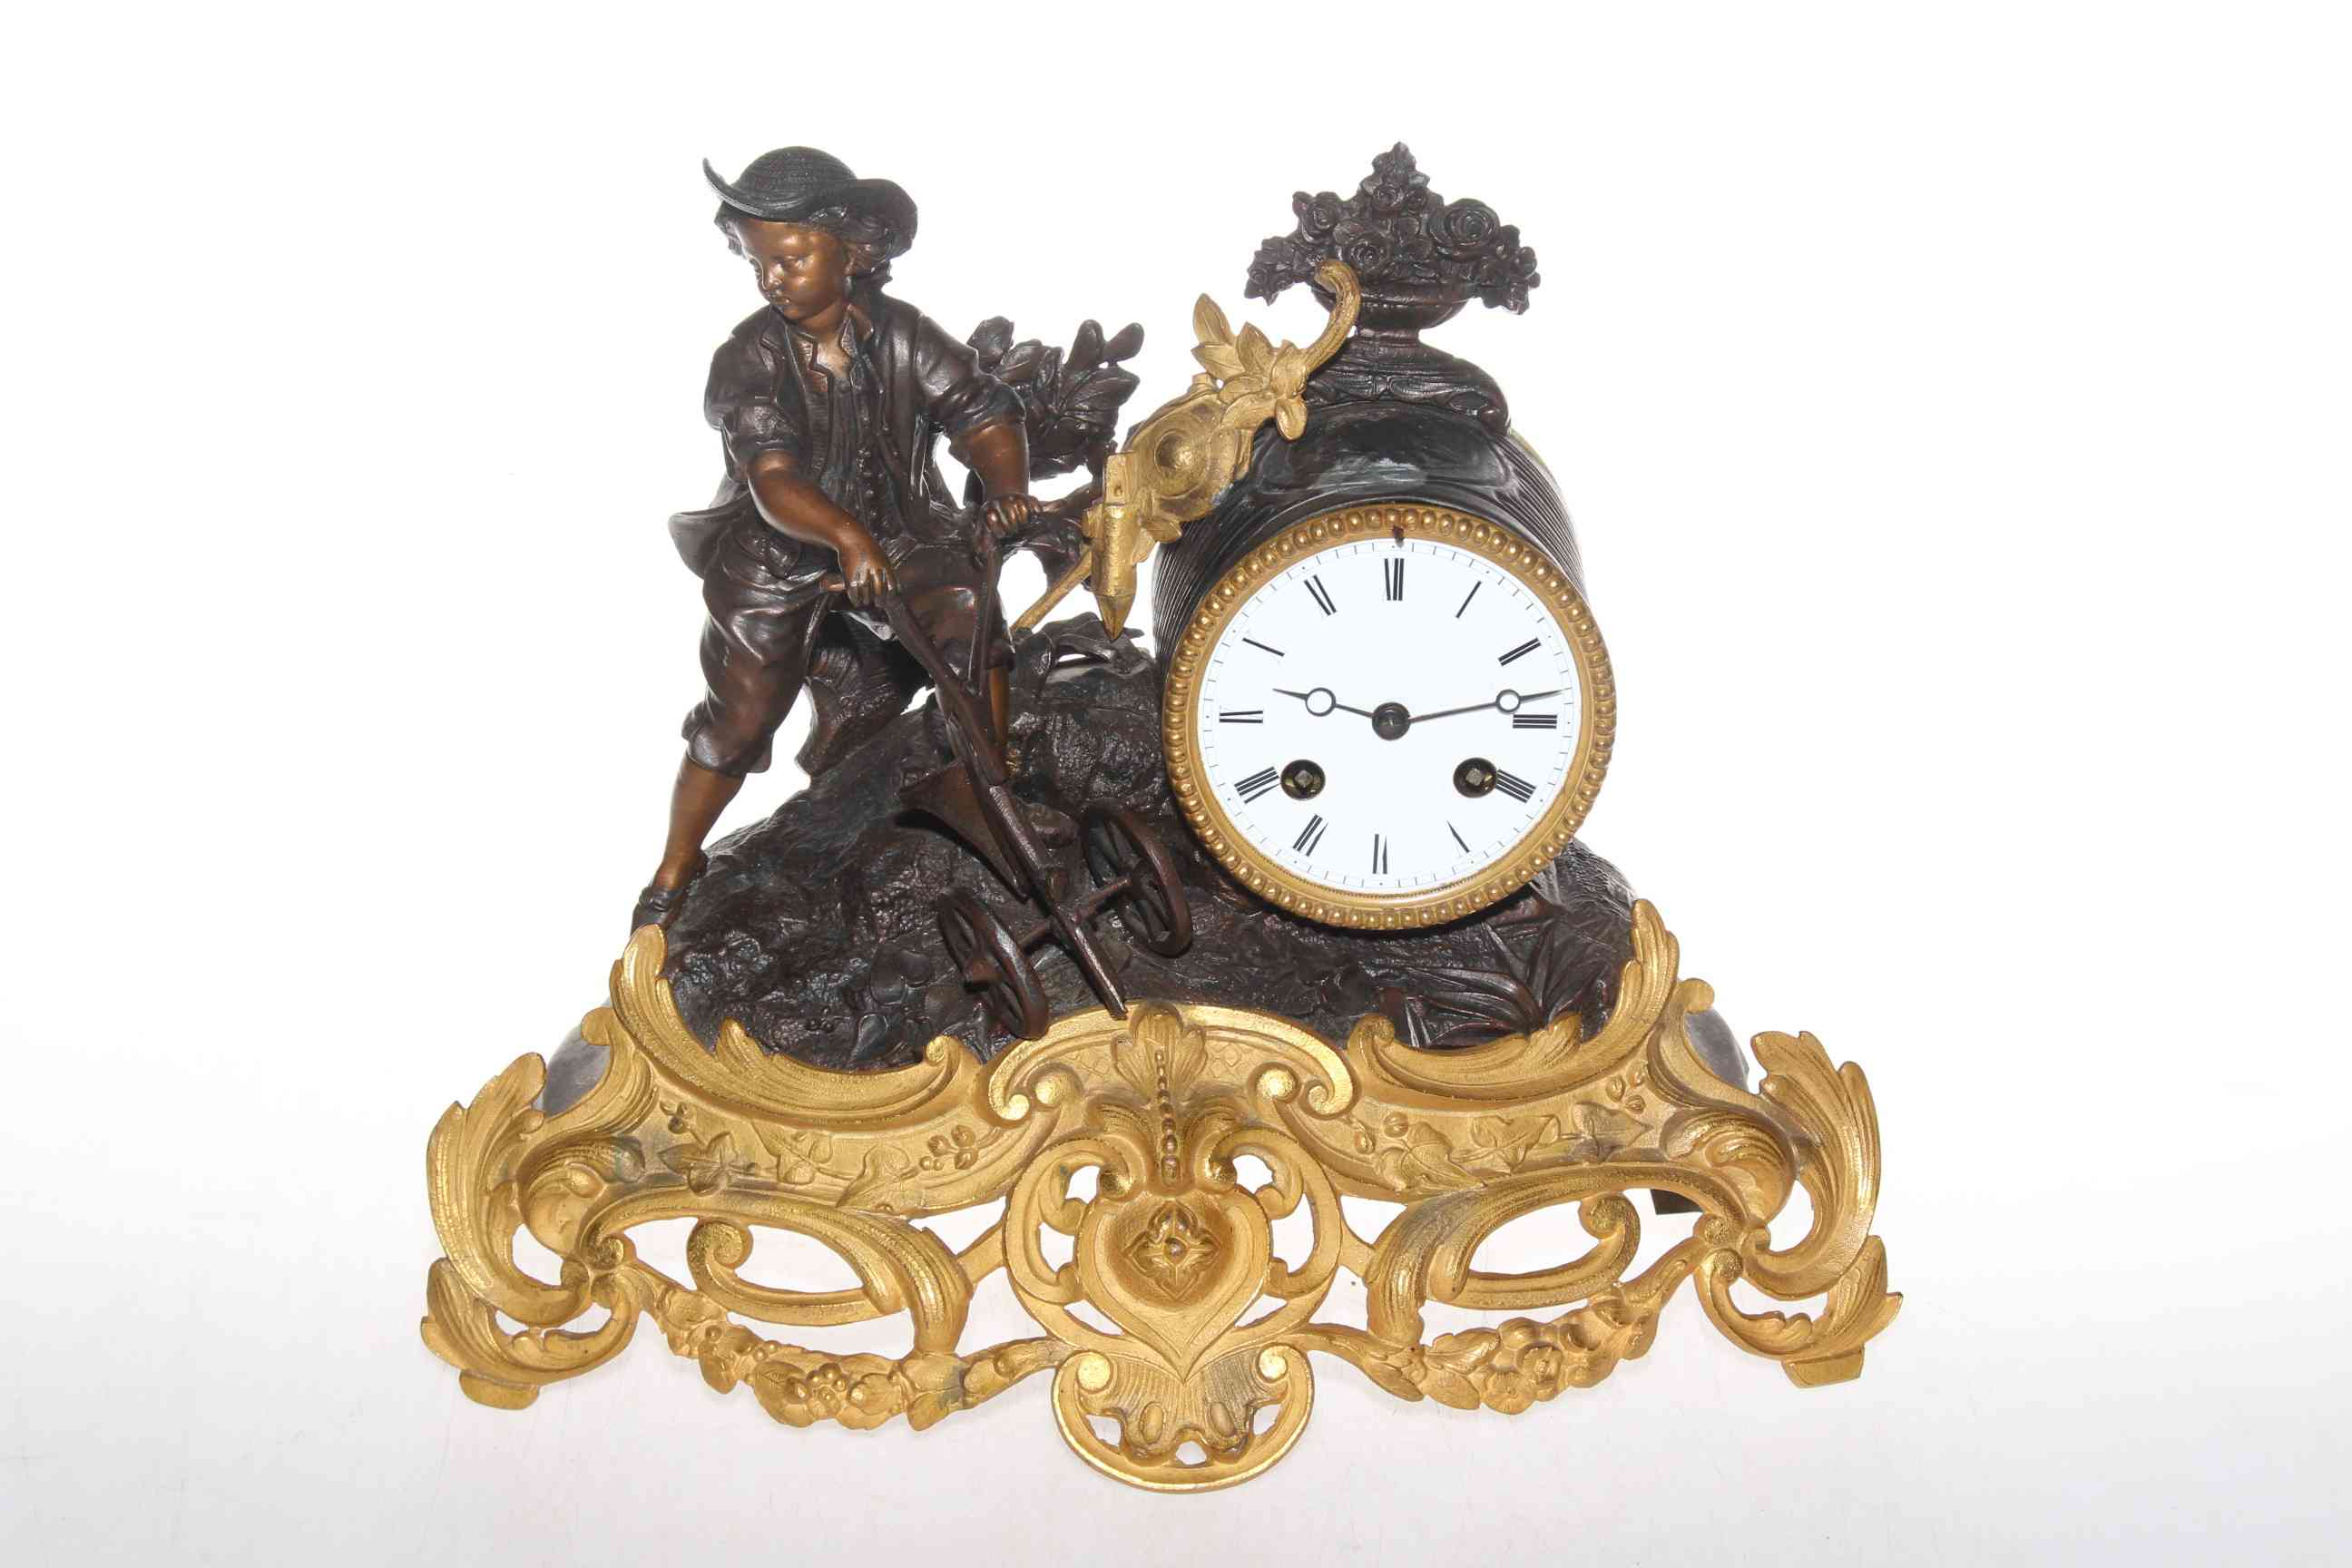 Ornate gilt mantel clock depicting a working young boy, 28cm high.